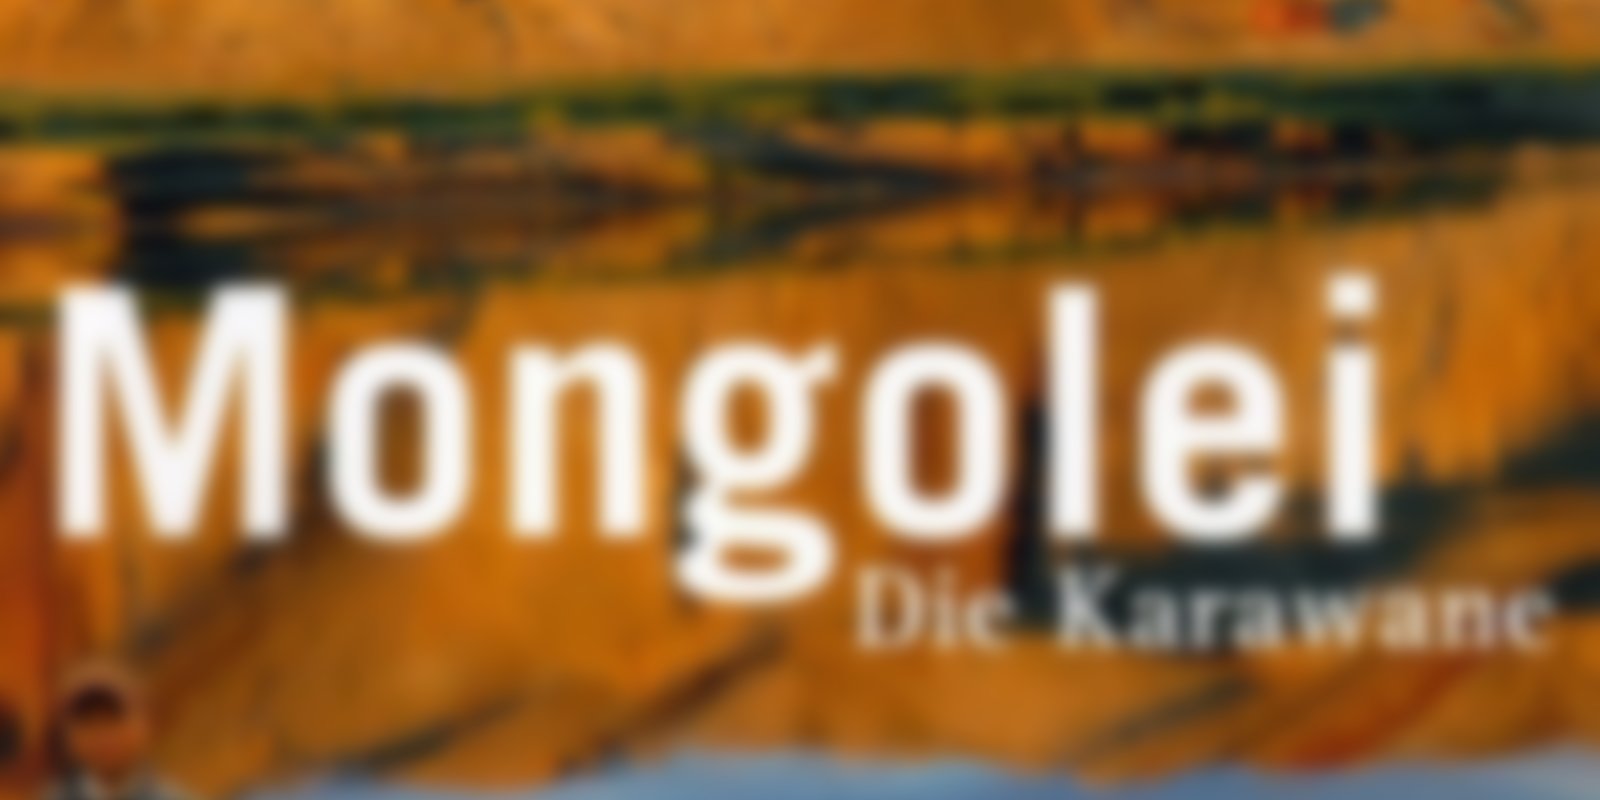 Mongolei - Die Karawane